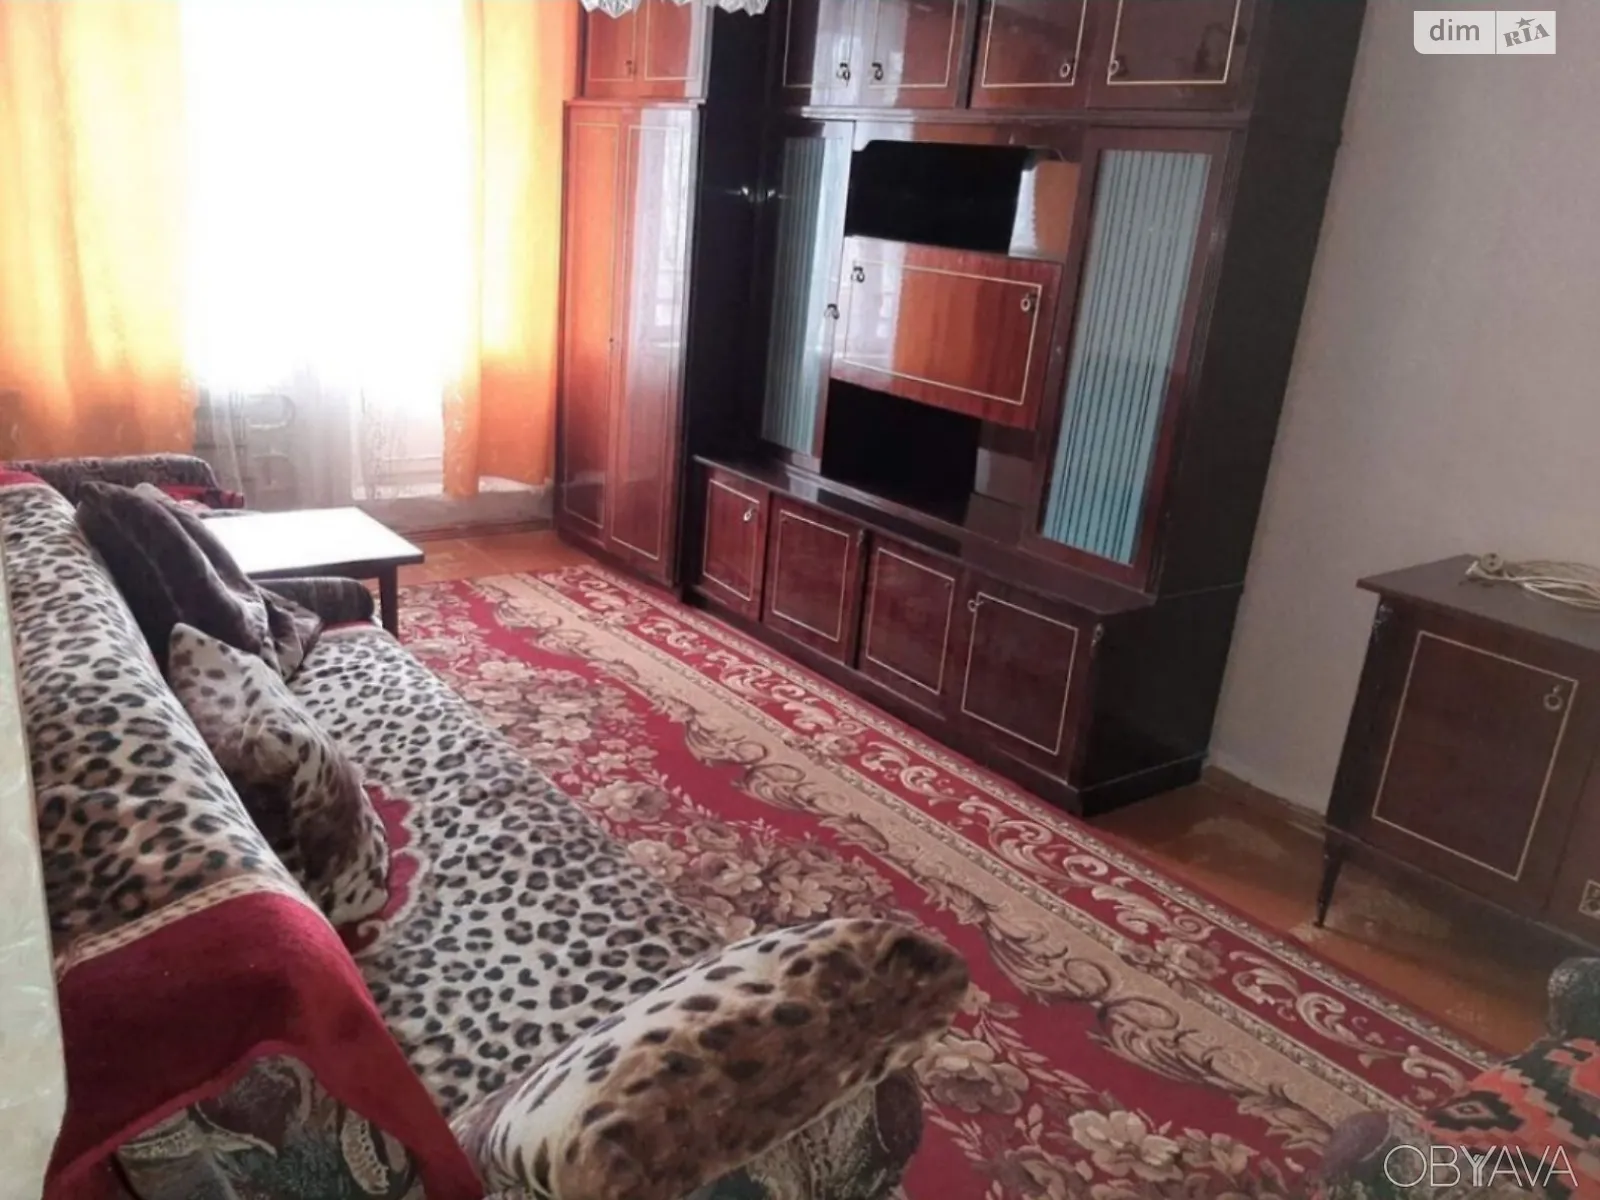 Сдается в аренду 2-комнатная квартира 454 кв. м в Харькове, ул. Академика Павлова - фото 1